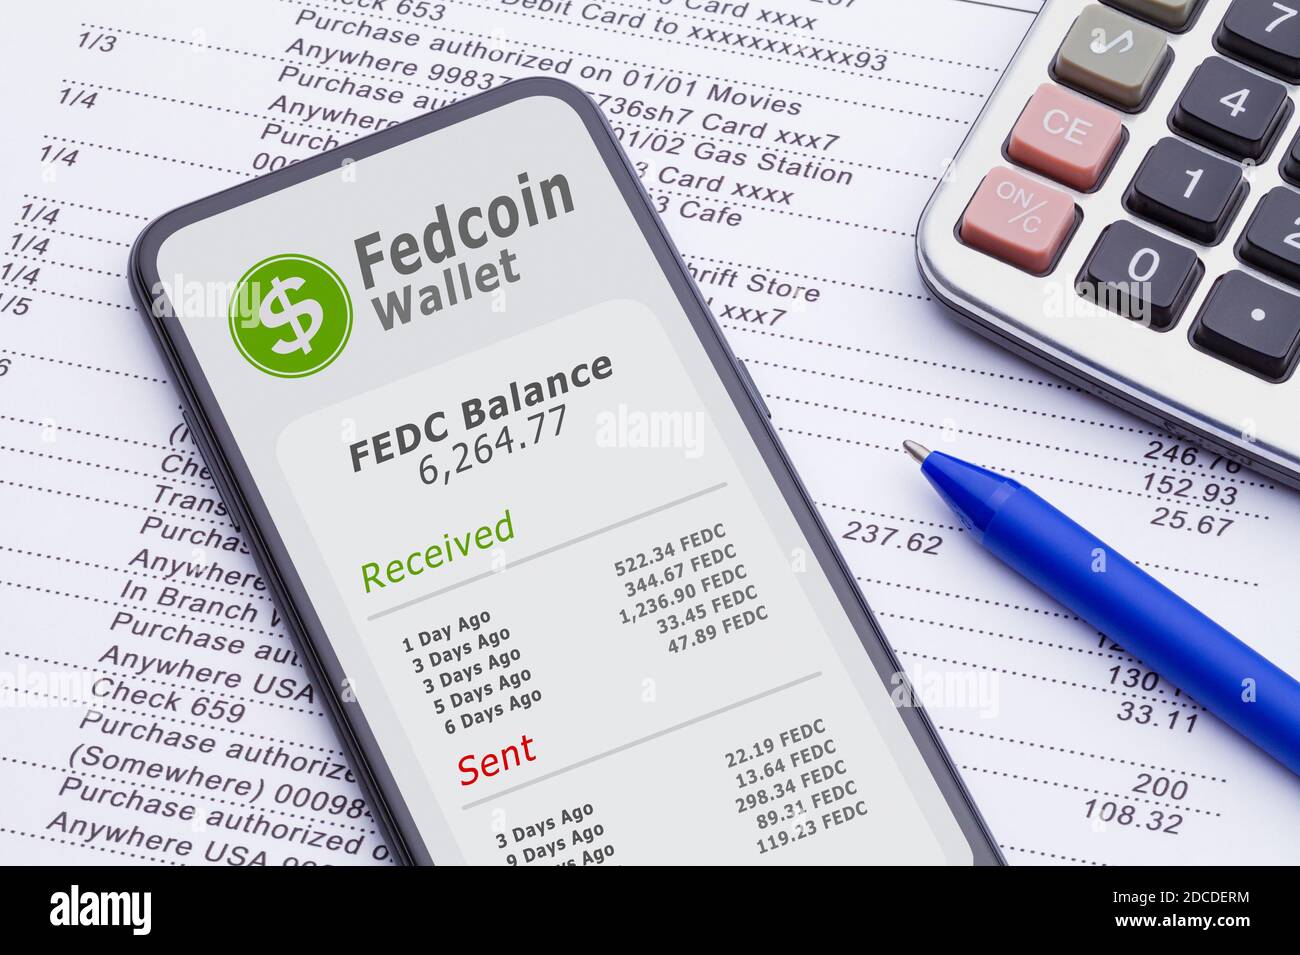 Teléfono inteligente con cartera digital Fedcoin en extracto bancario con calculadora y bolígrafo. Foto de stock